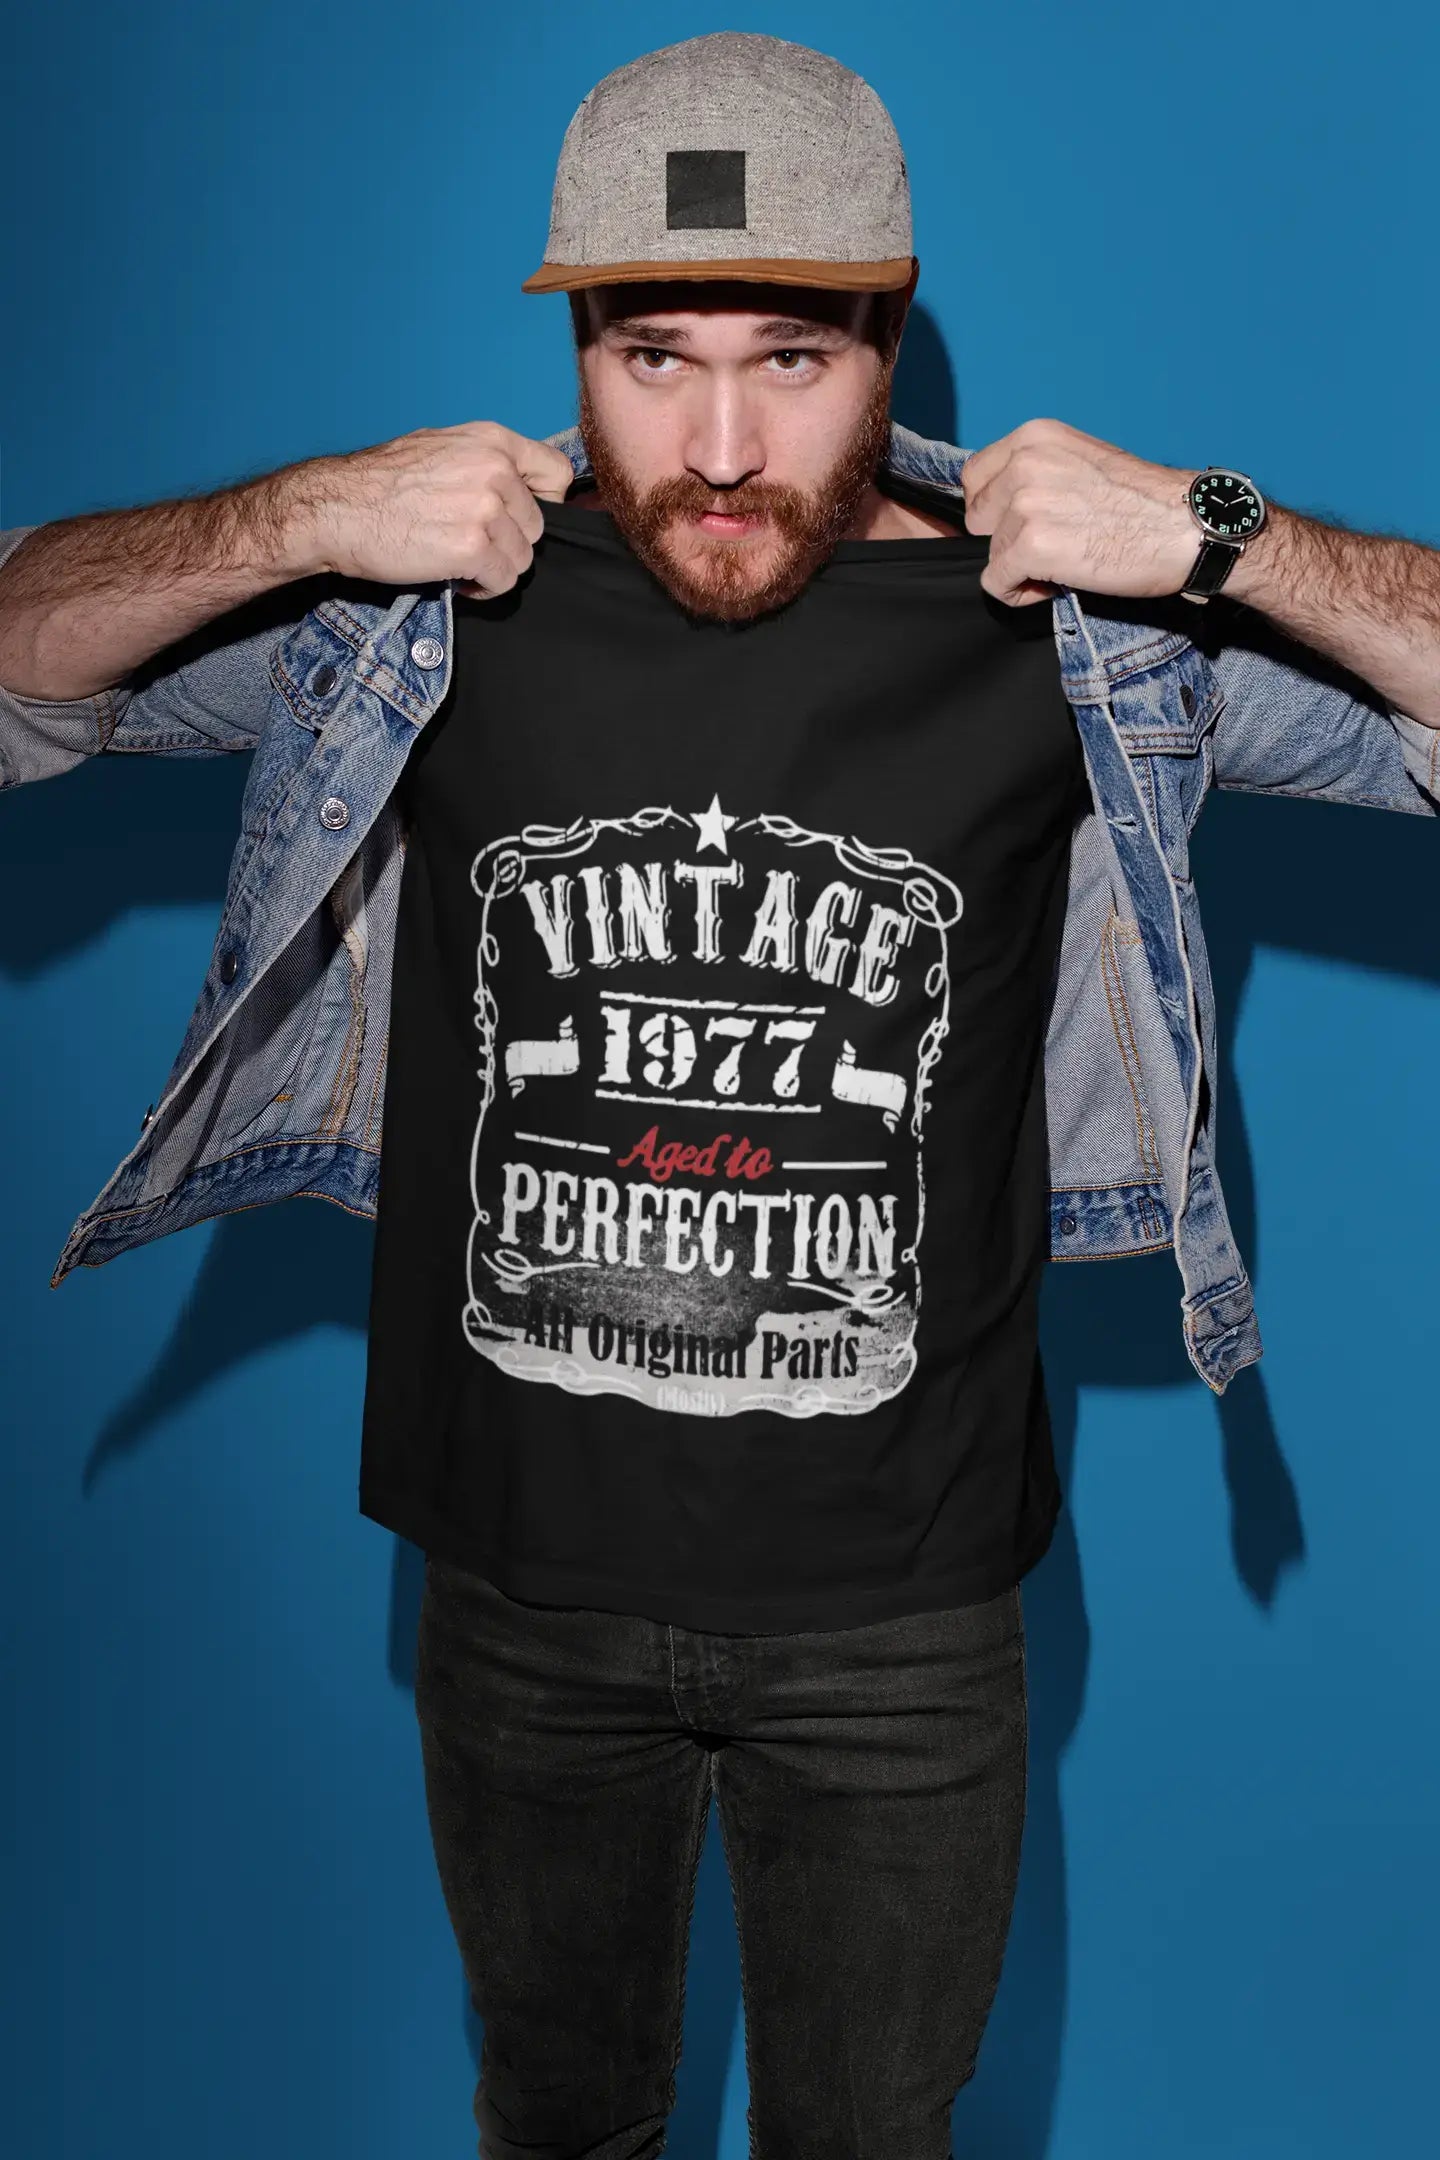 1977 Vintage Aged to Perfection Men's T-shirt Black Birthday Gift Round Neck00490